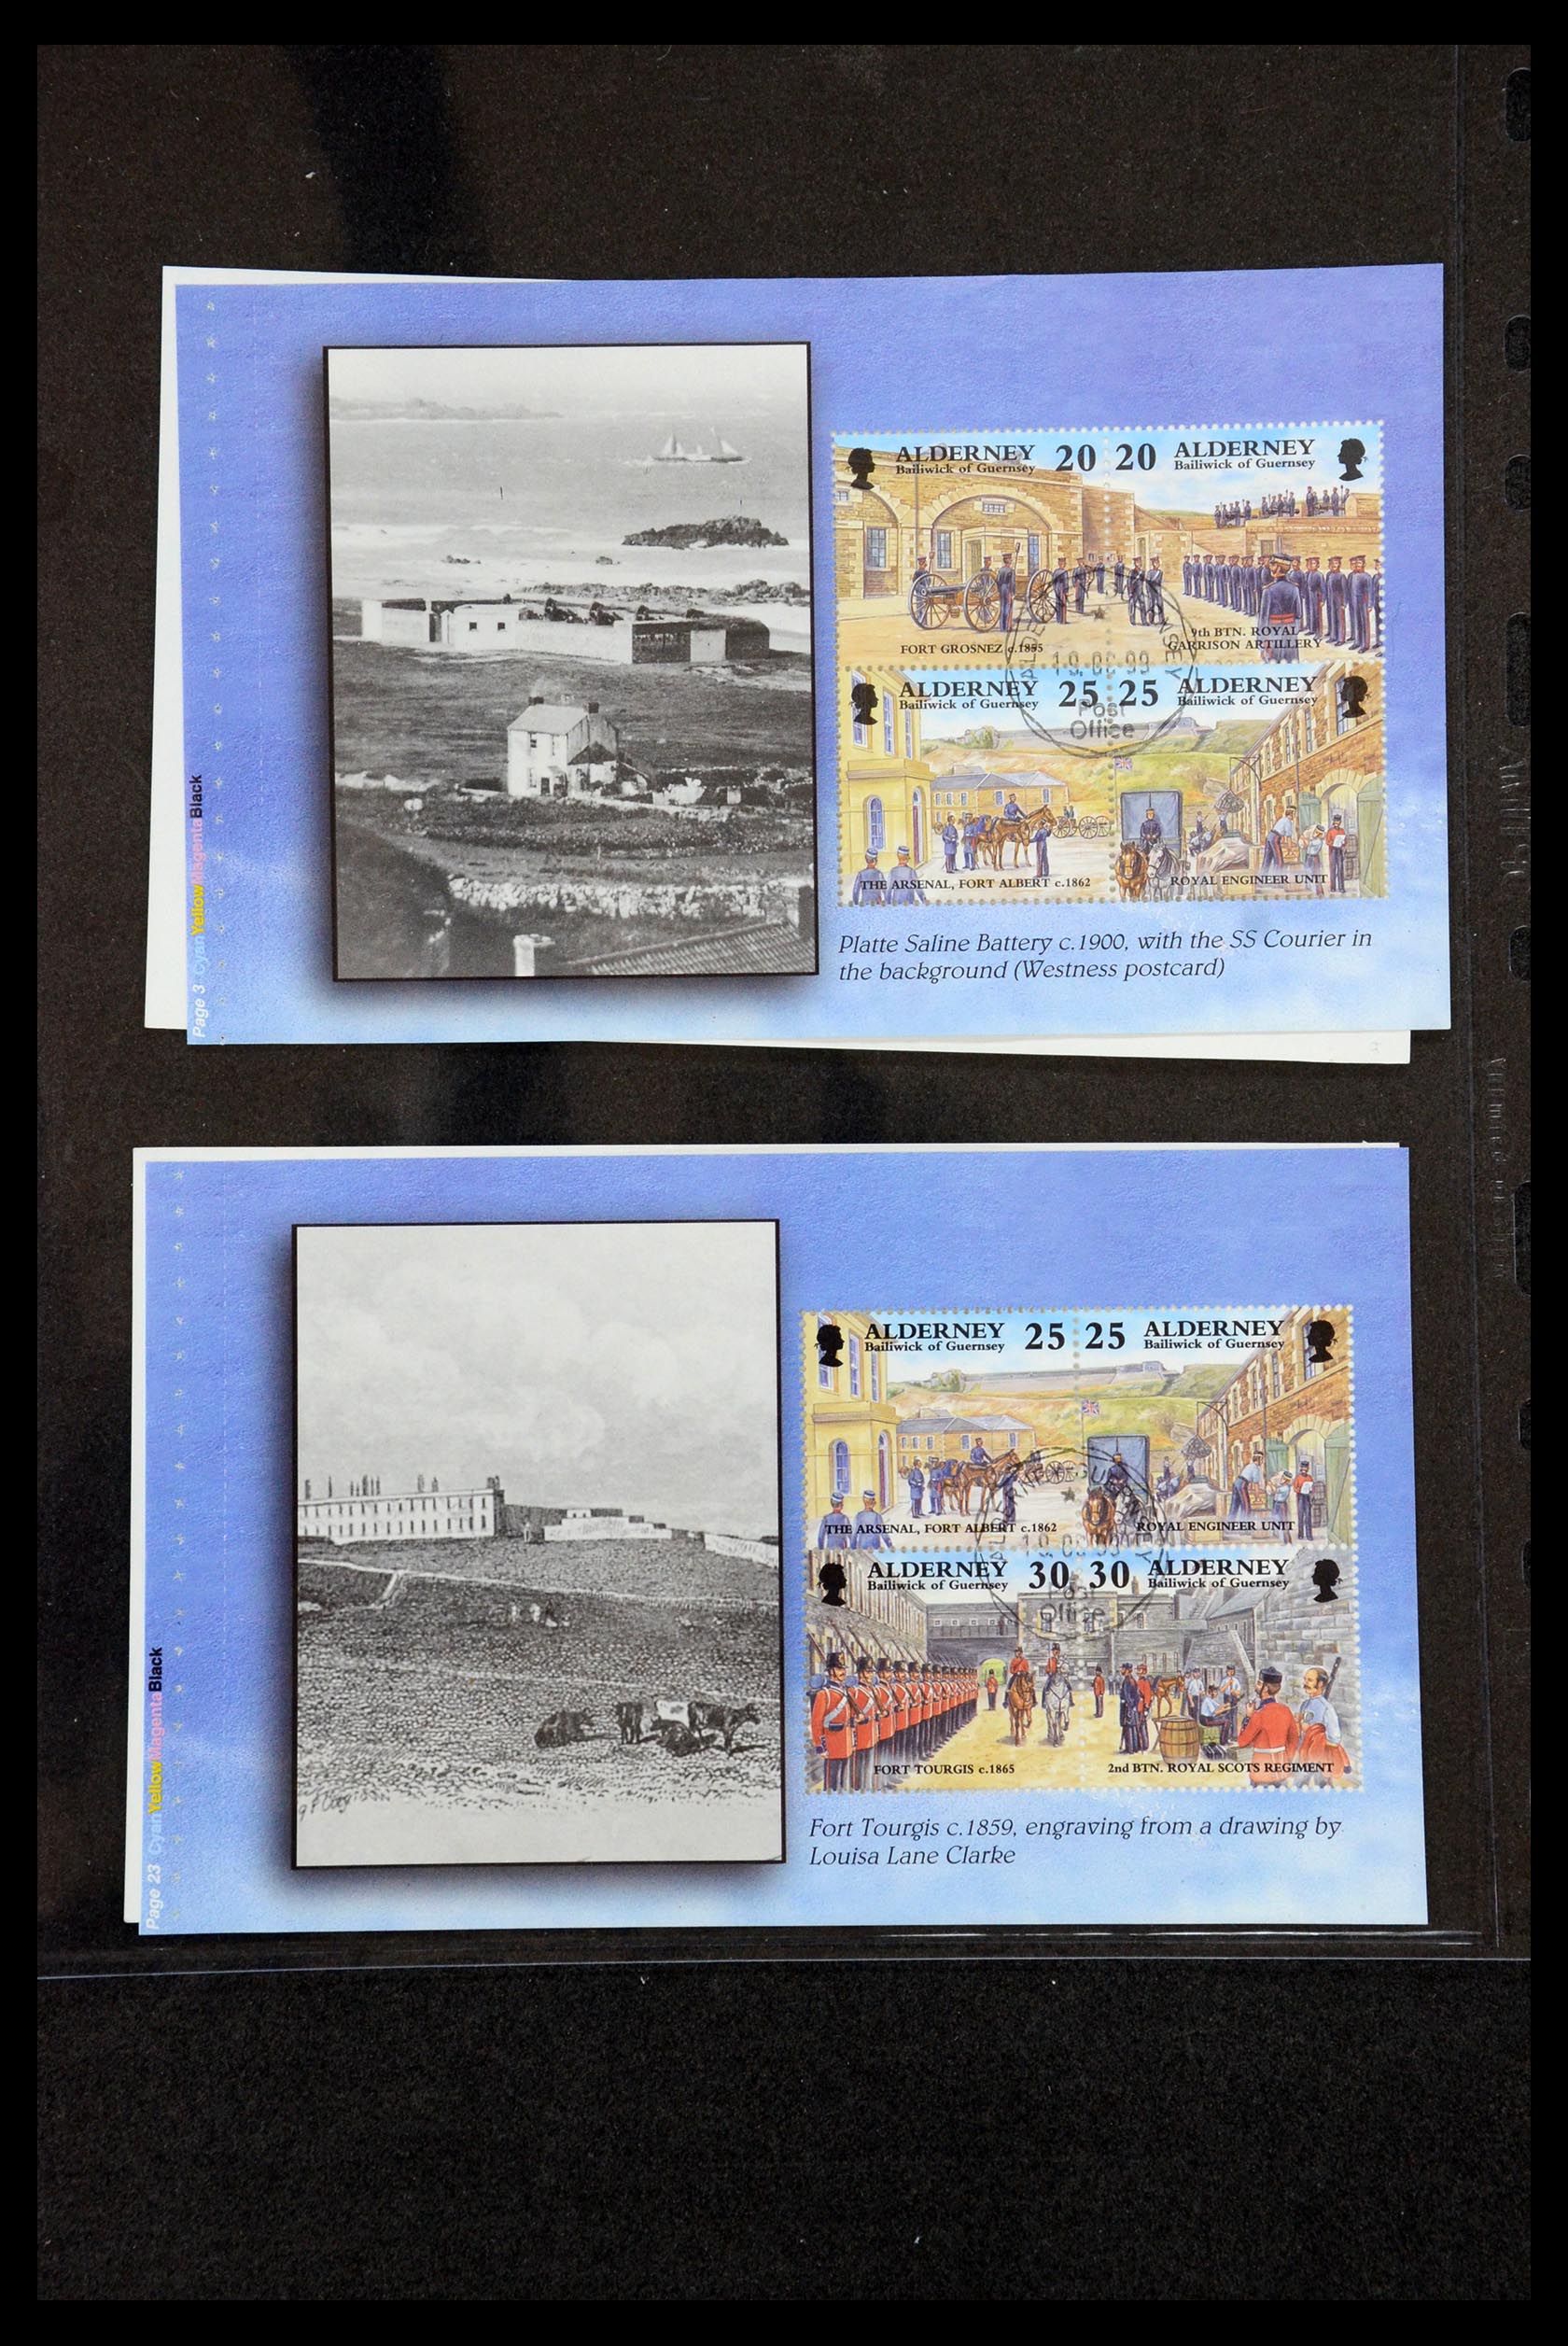 35976 019 - Stamp collection 35976 Guernsey and Alderney stamp booklets 1969-2015!